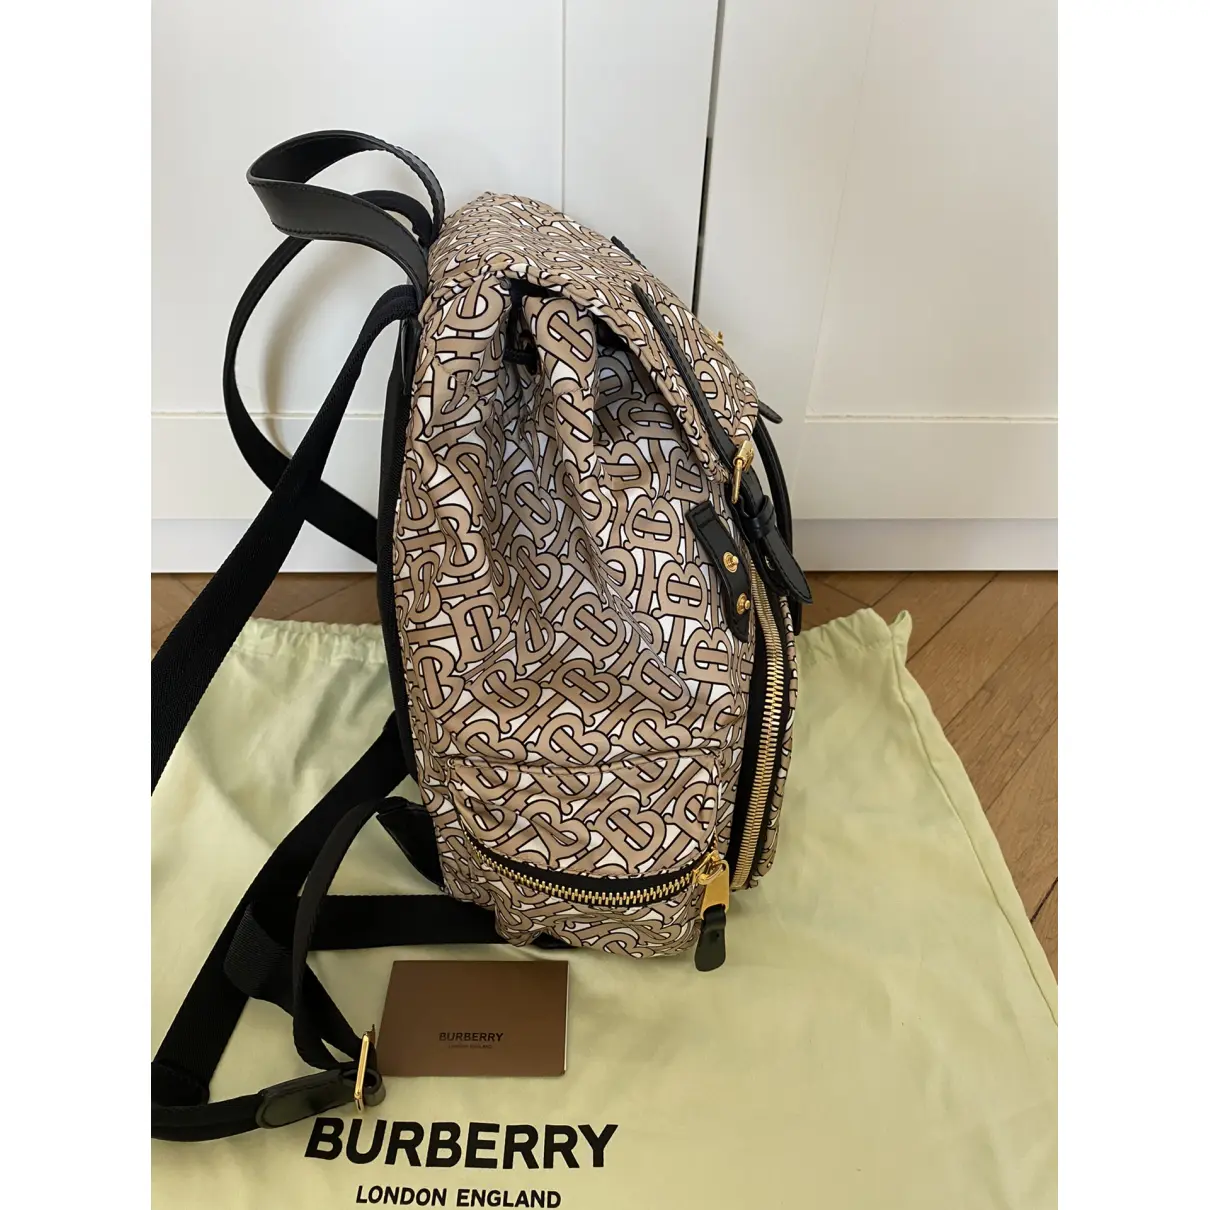 The Rucksack backpack Burberry